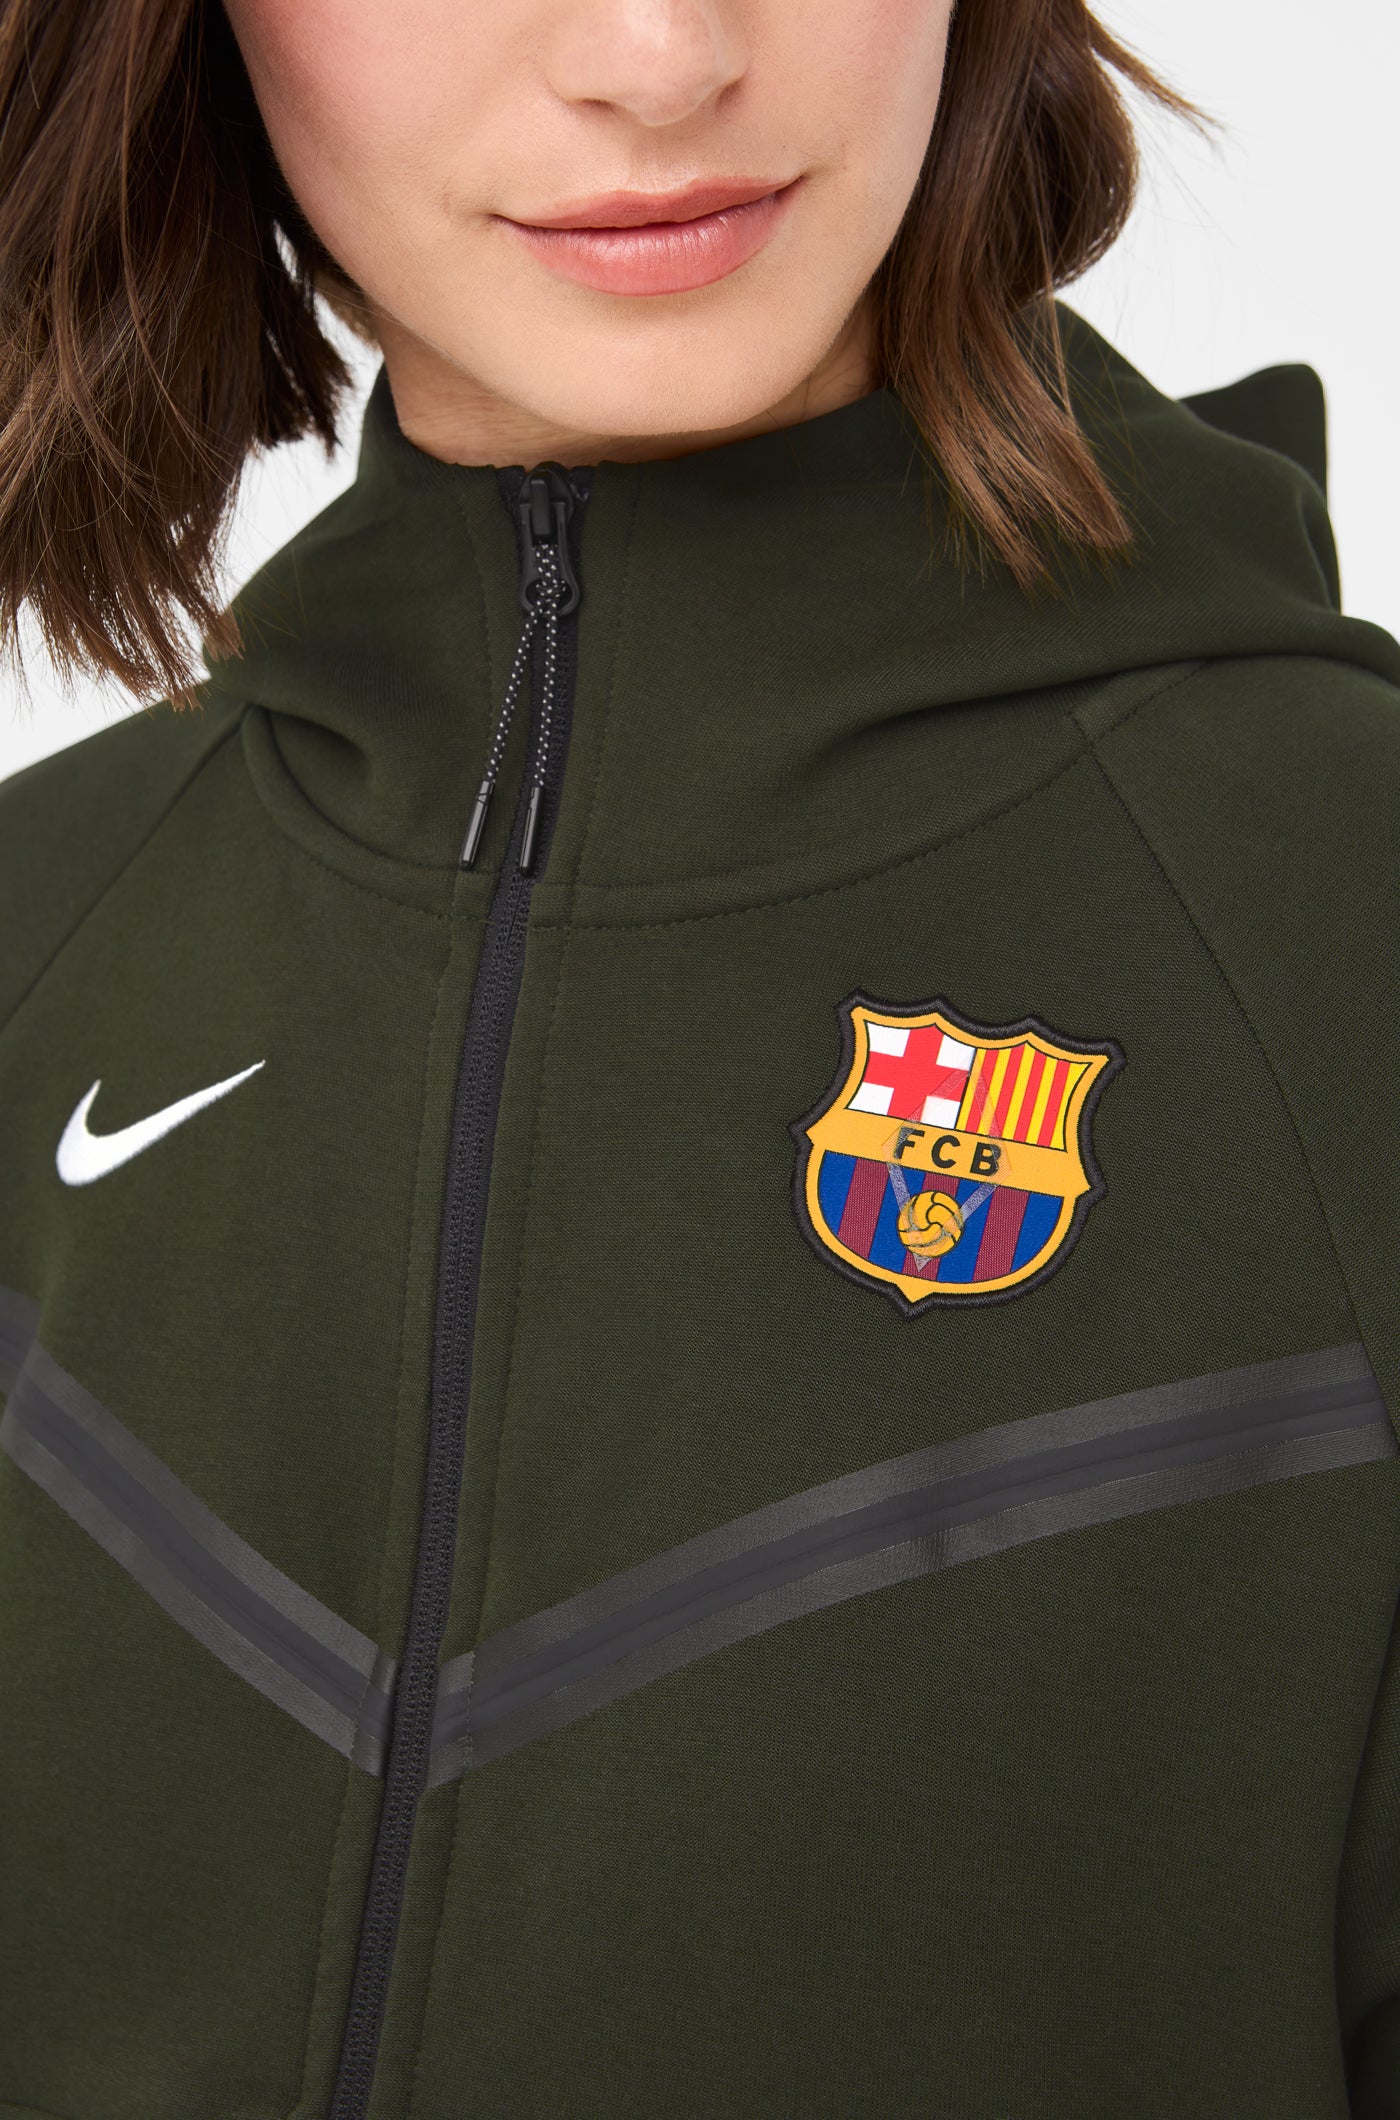 Jaqueta verda Barça Nike - Dona